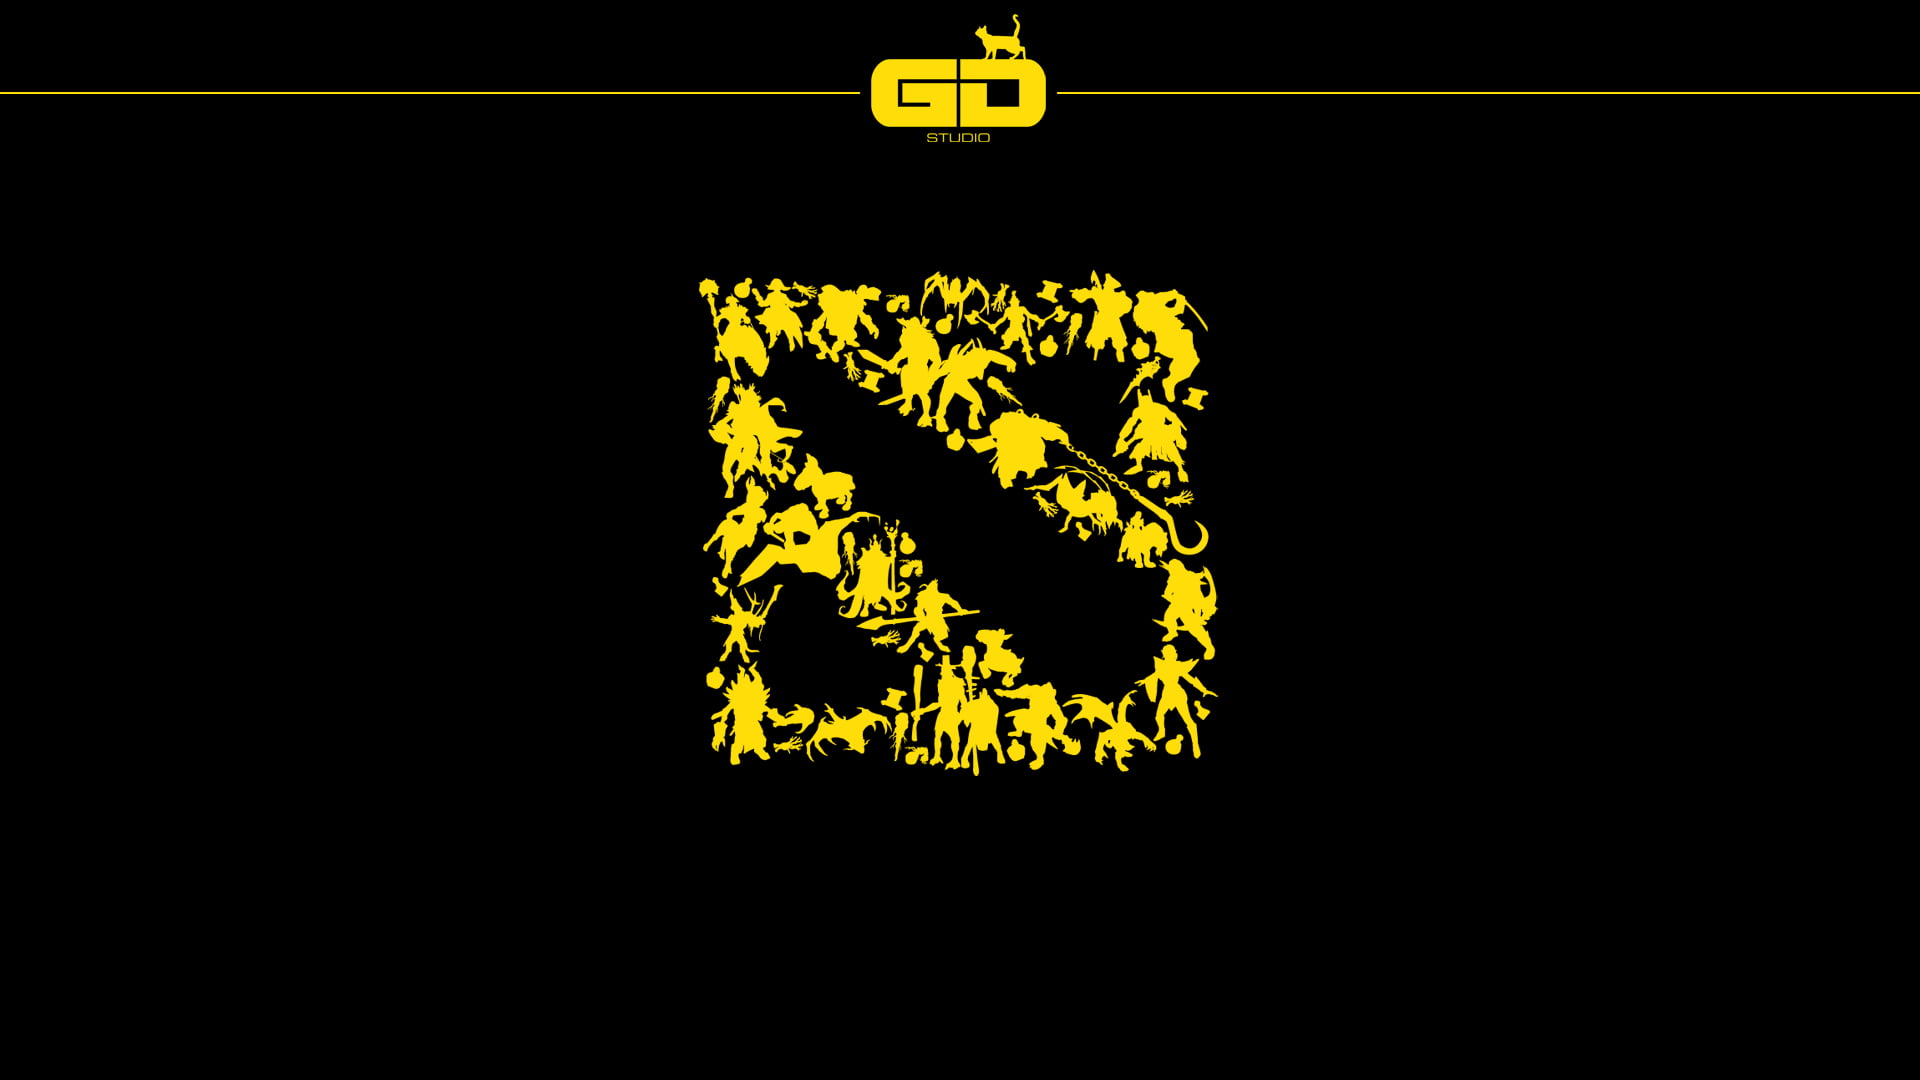 yellow and black DOTA logo digital wallpaper, Dota 2, video games